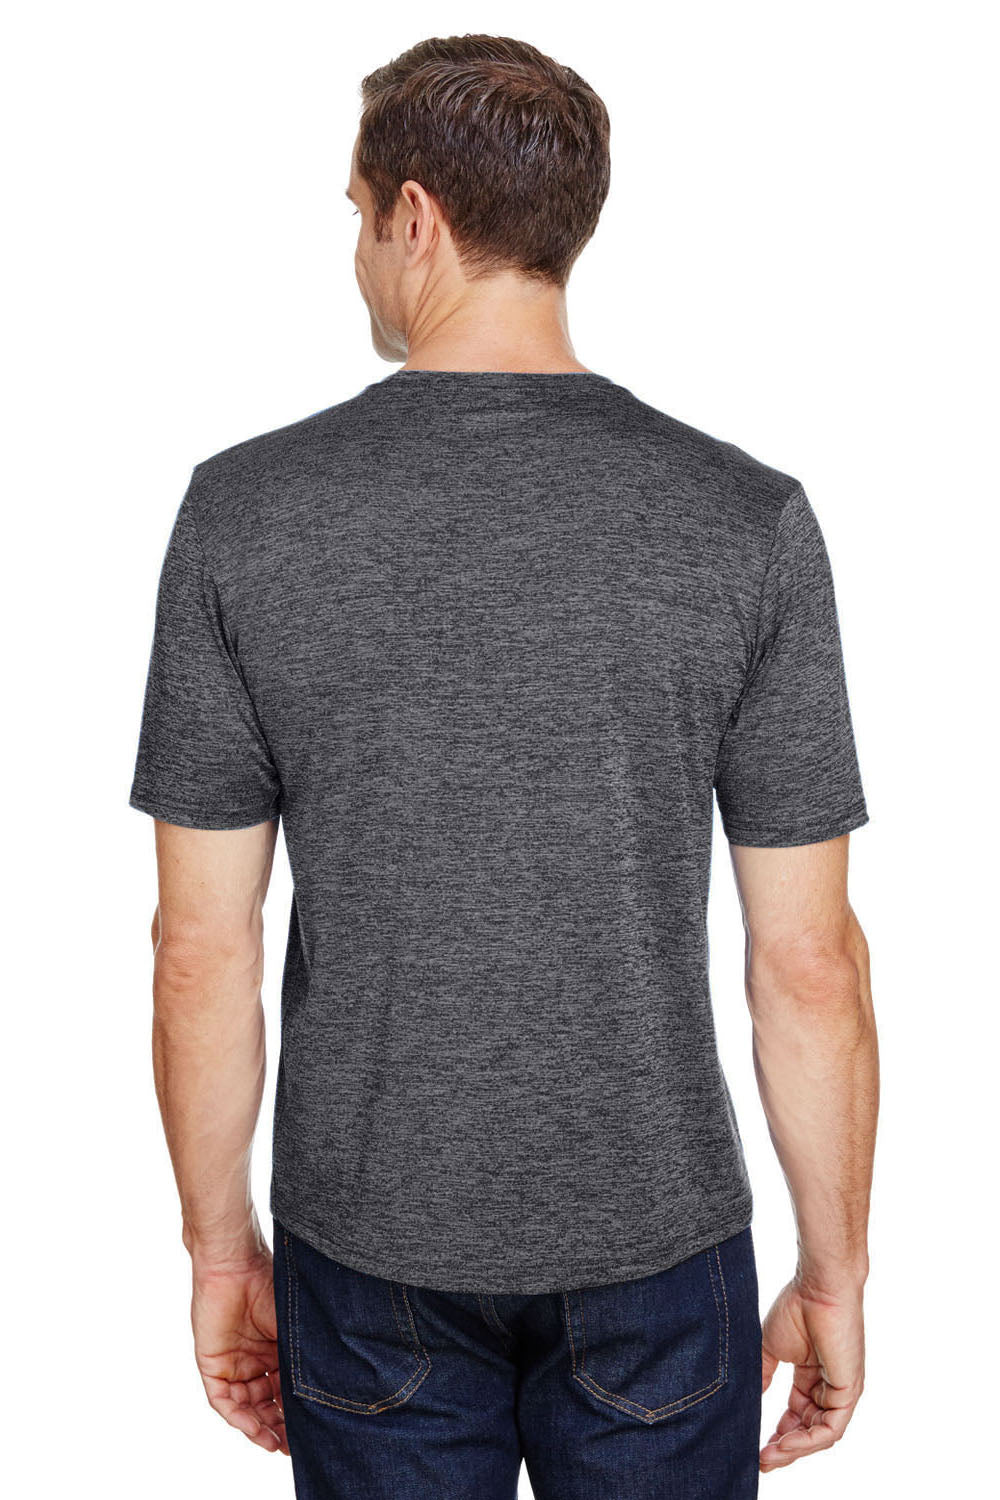 A4 N3010 Mens Tonal Space Dye Crewneck Short Sleeve T-Shirt Charcoal Grey Back